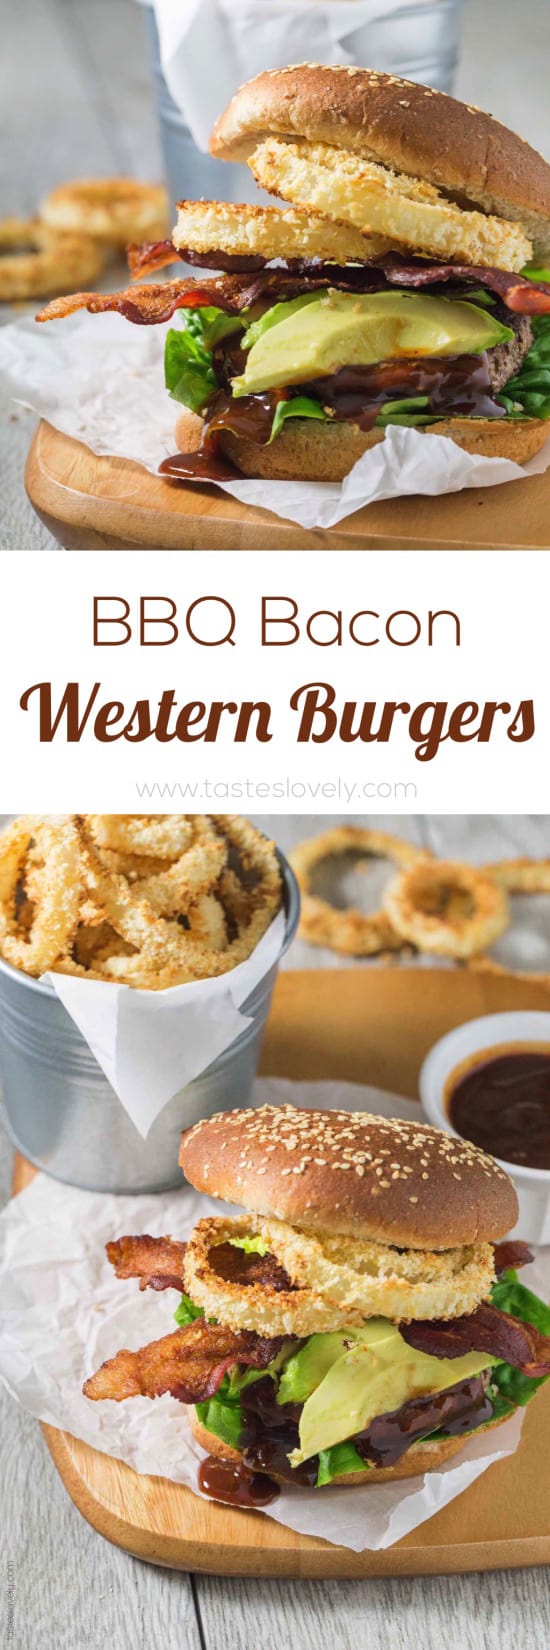 BBQ Bacon Western Burgers